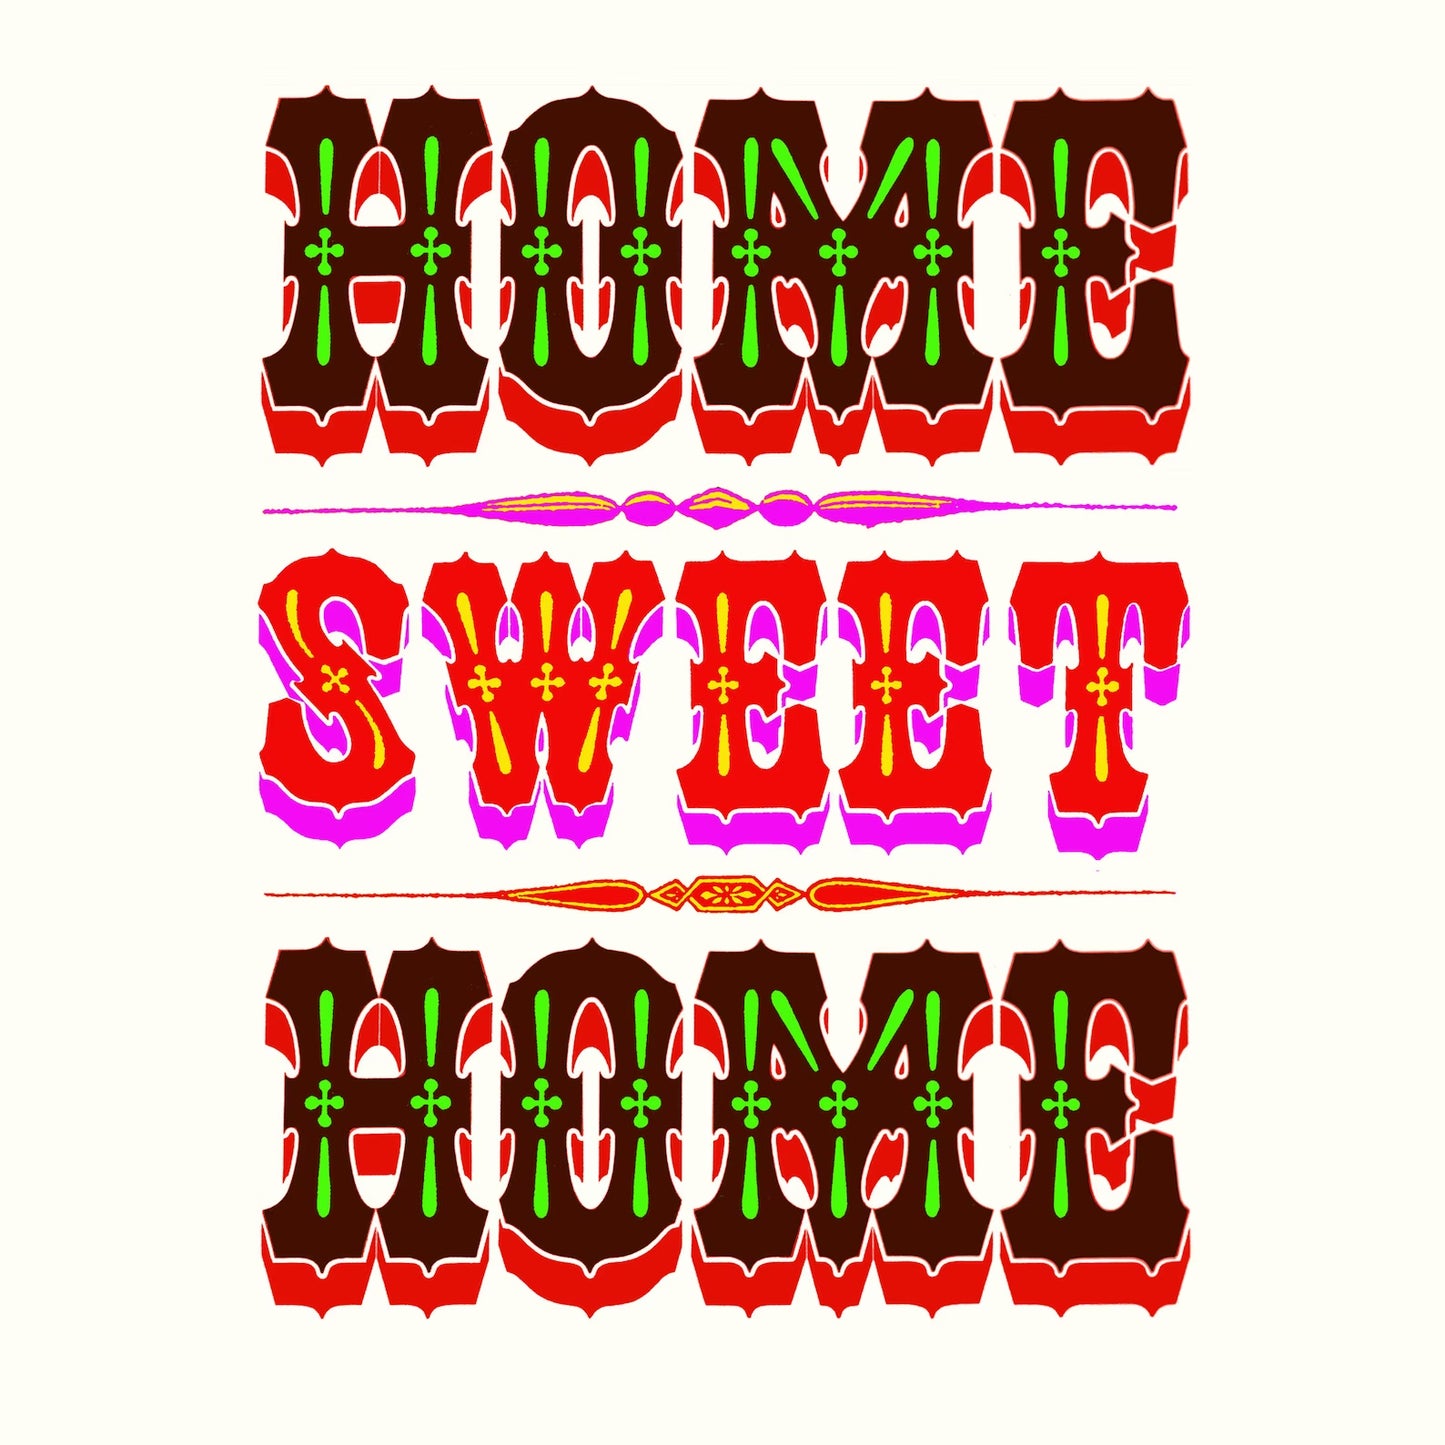 Home sweet home A3 screenprint